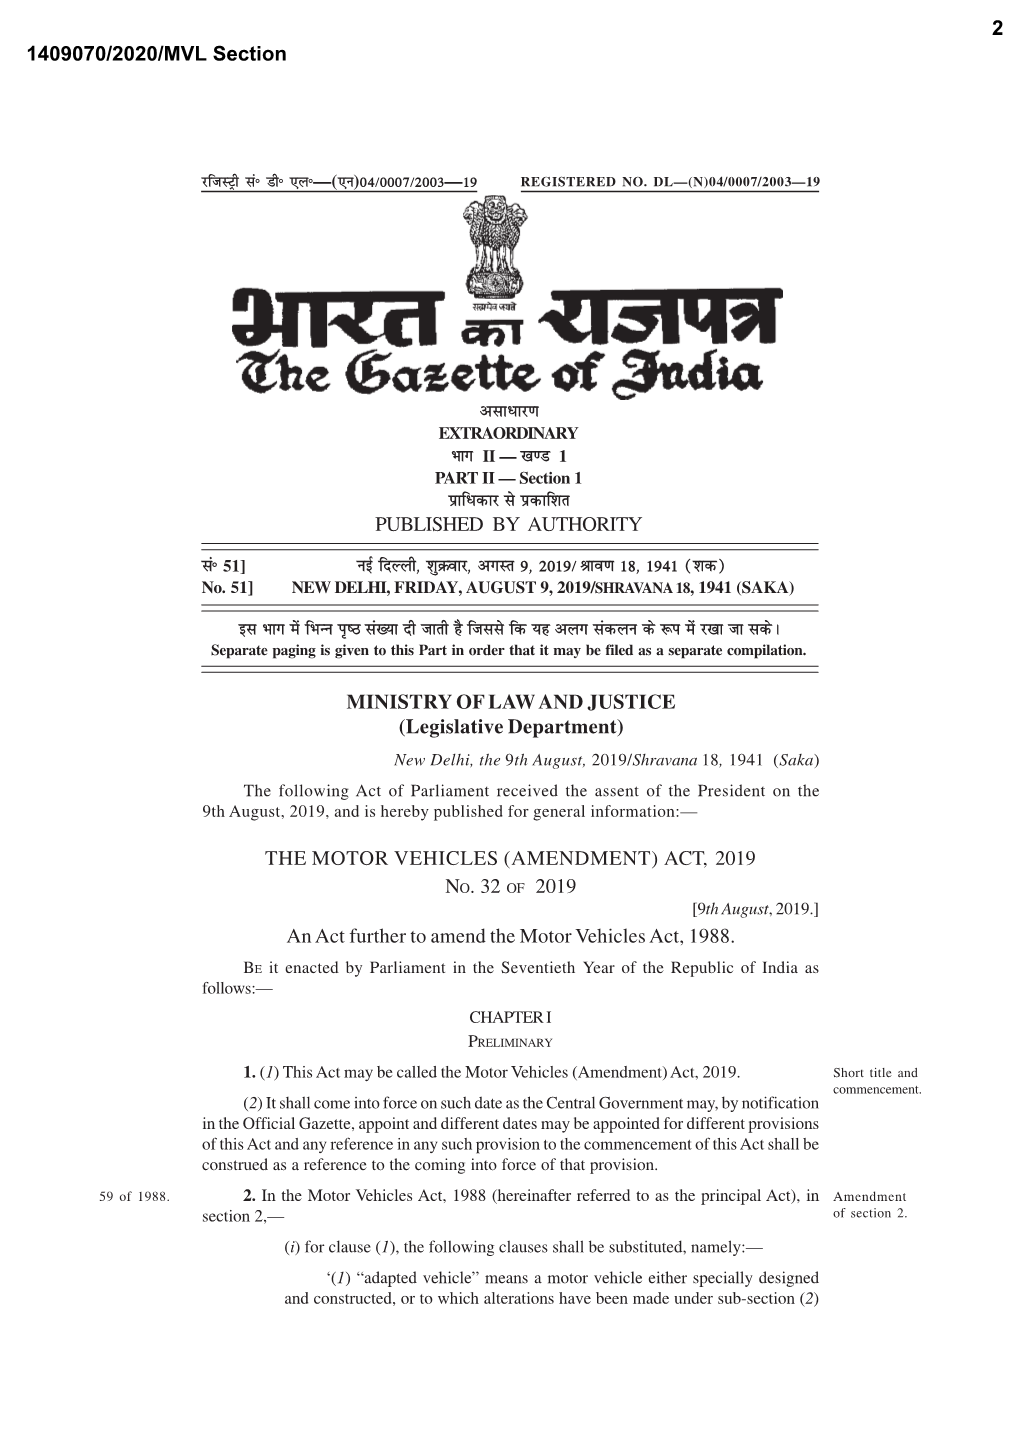 The Motor Vehicles (Amendment) Act, 2019 No